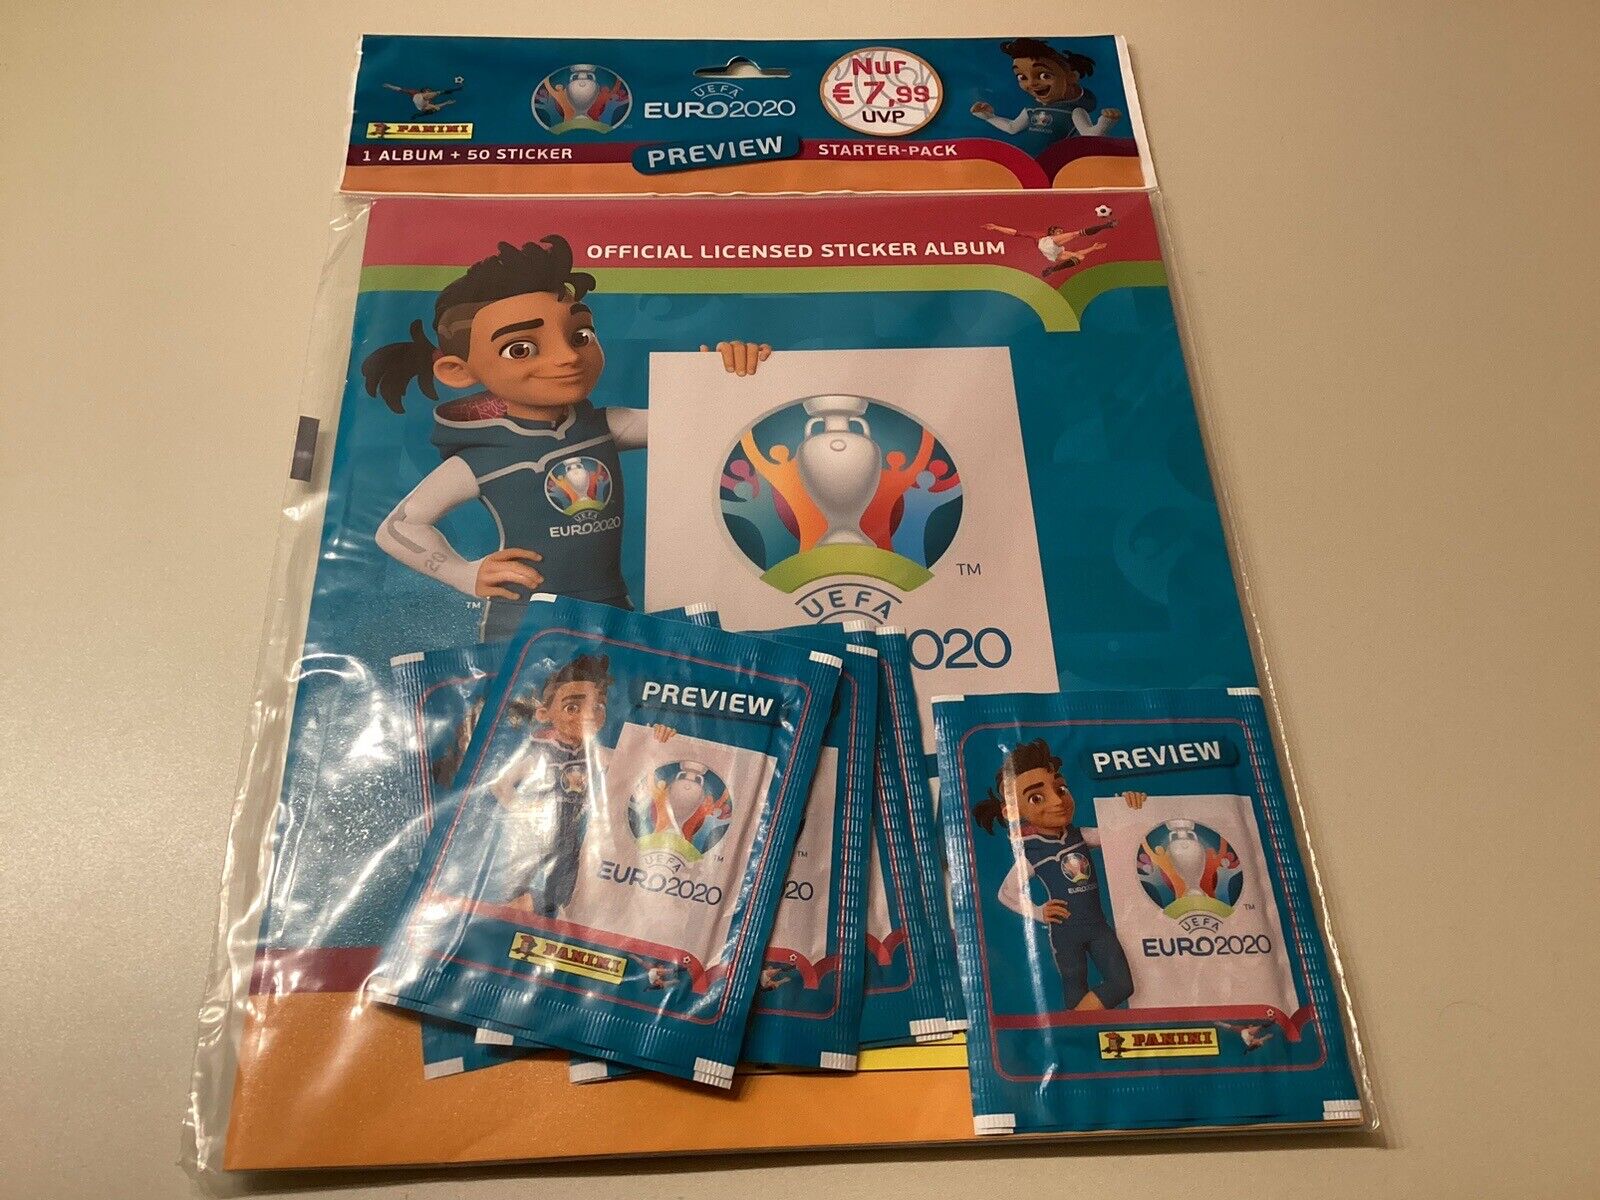 Panini UEFA EM EURO 2020 Preview Starter Pack - 1 album + 50 stickers - TOP ORIGINAL PACKAGING